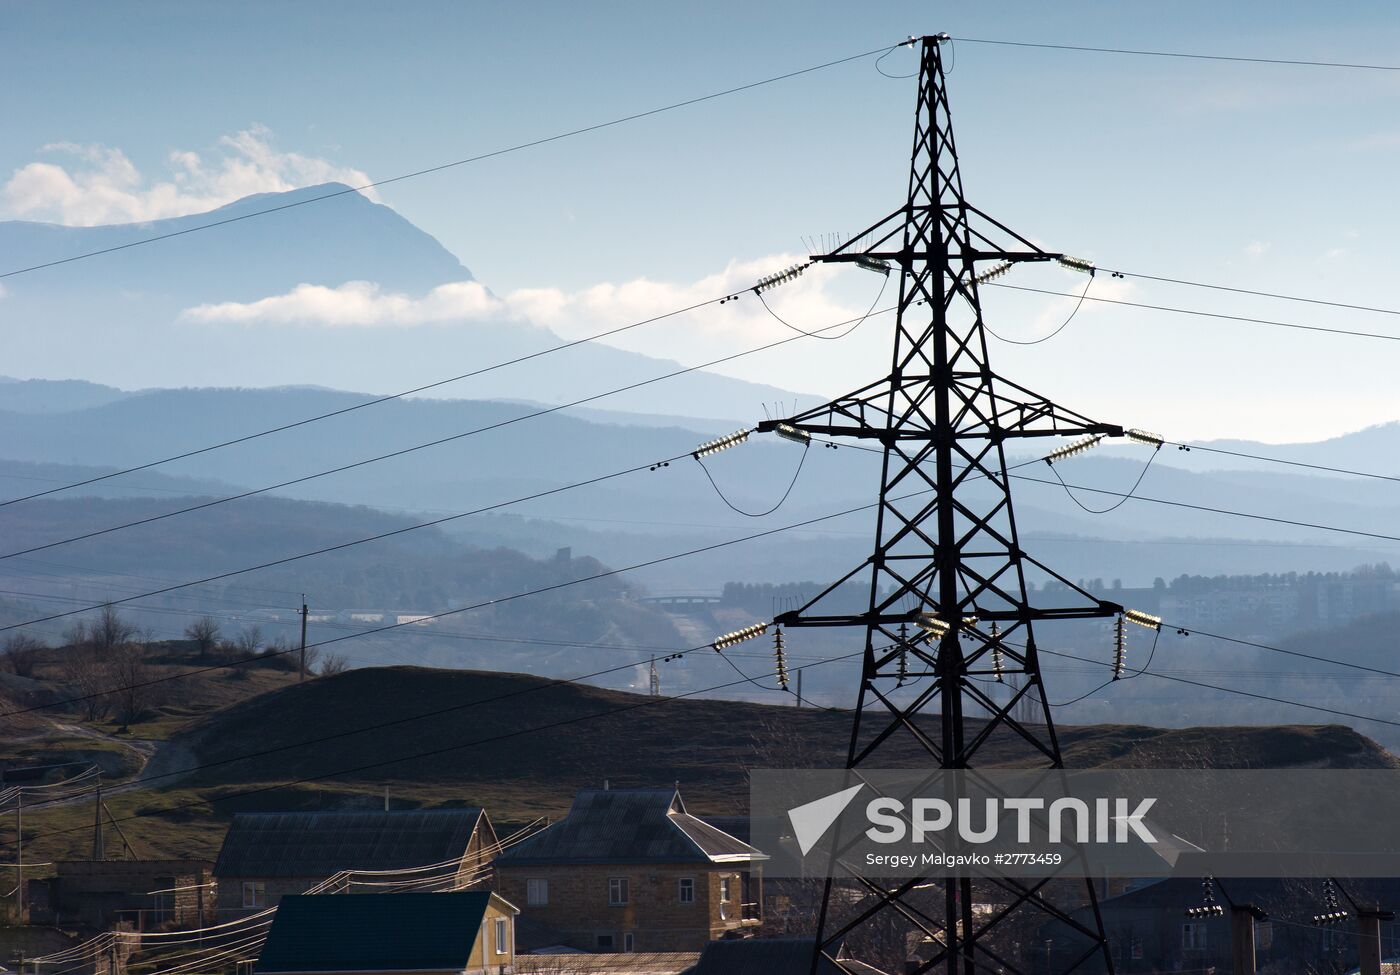 Energy facilities in Crimea